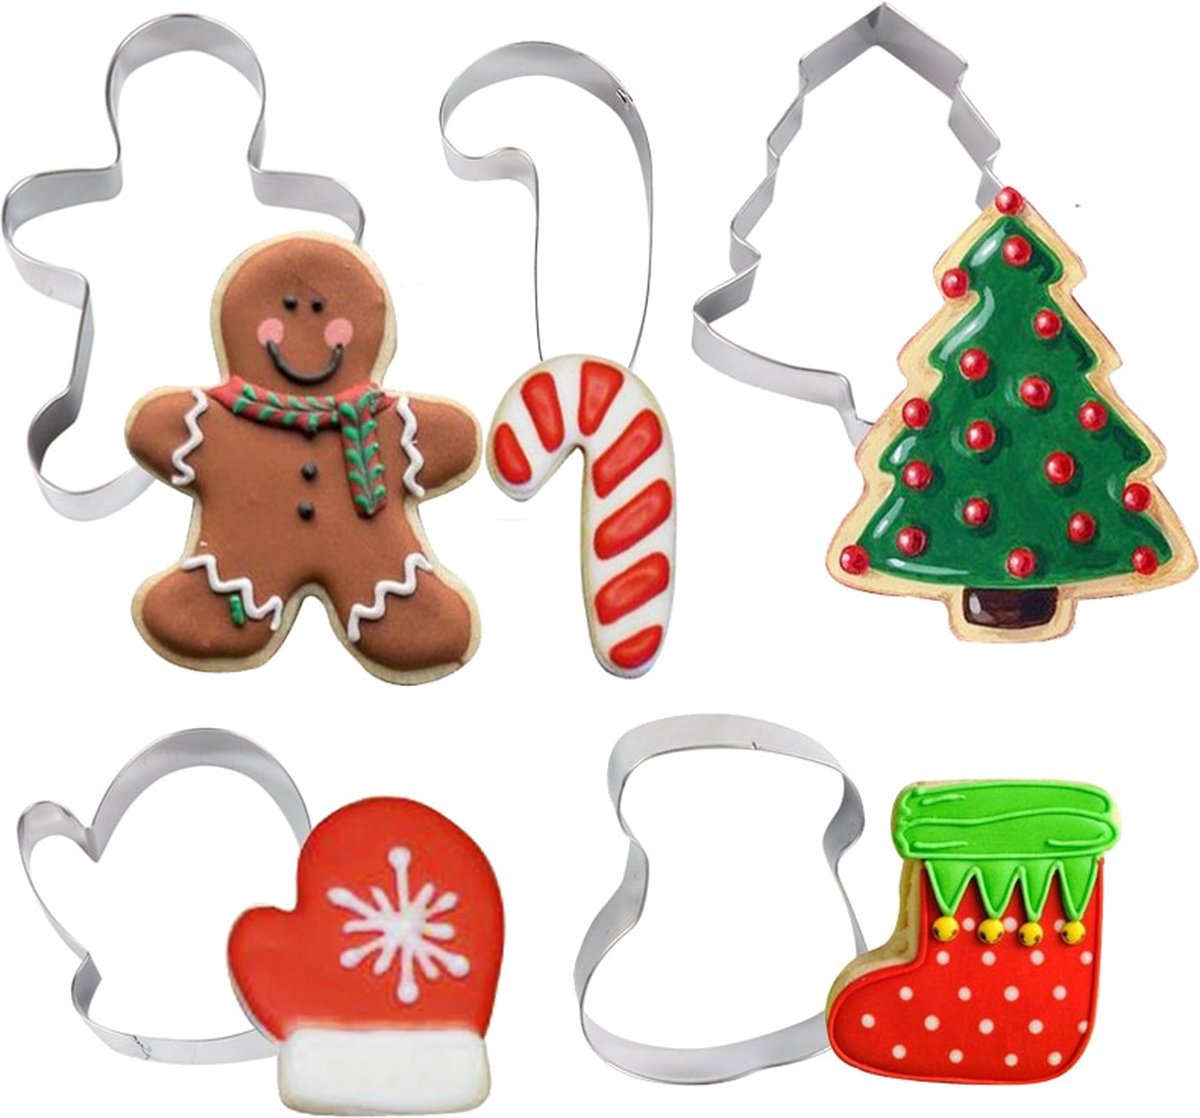 Winkrs | 5x Uitsteekvormen Kerstboom, Koekemannetje, Zuurstok, Kerstsok en Want | RVS Bakvorm, kerst, bakken, koekjes, feestdagen